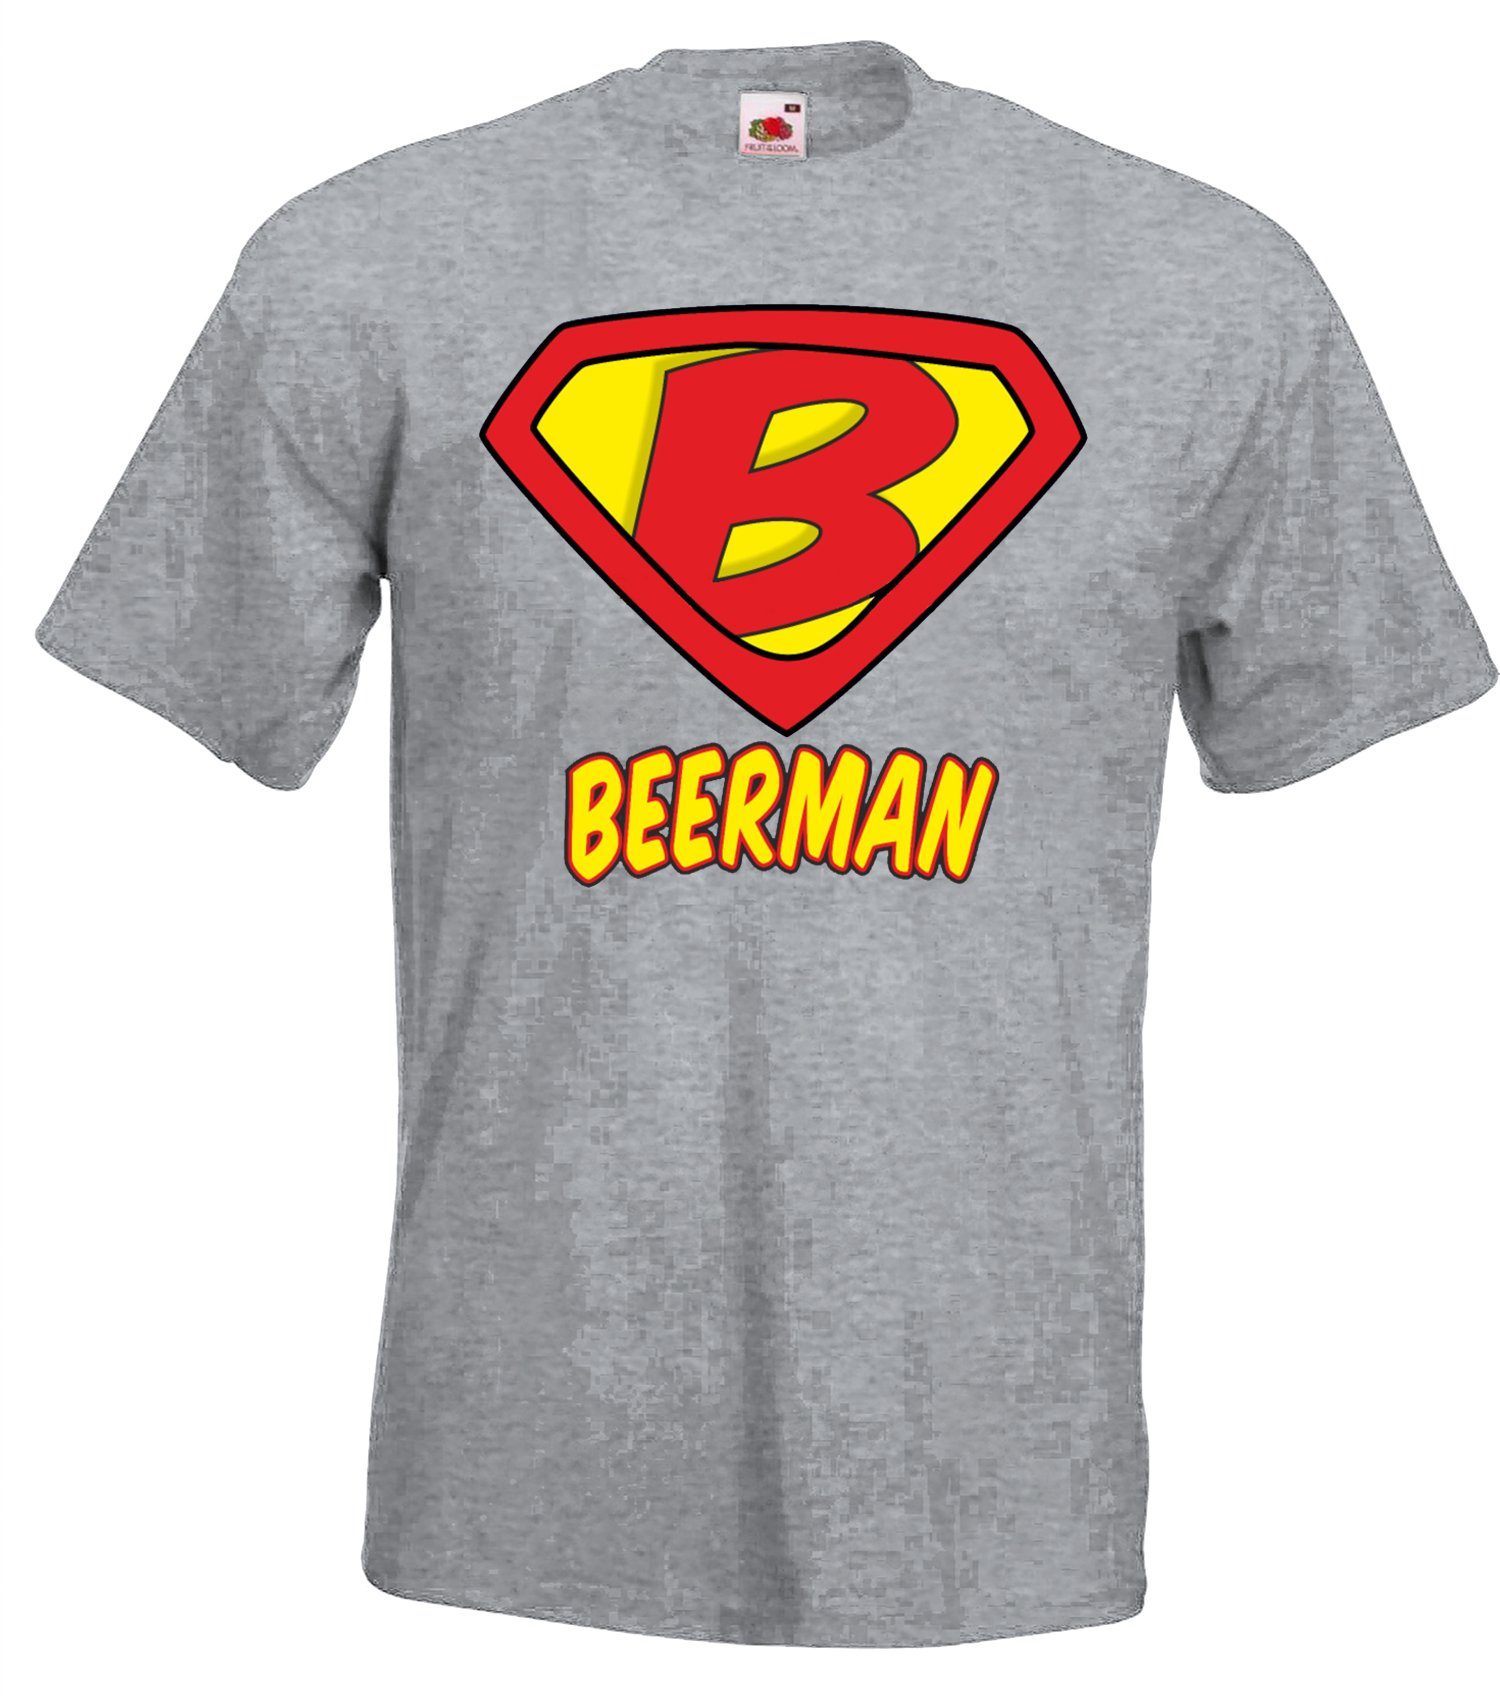 Beerman Herren T-Shirt mit Youth Helden Shirt witzigem Frontprint Designz Grau